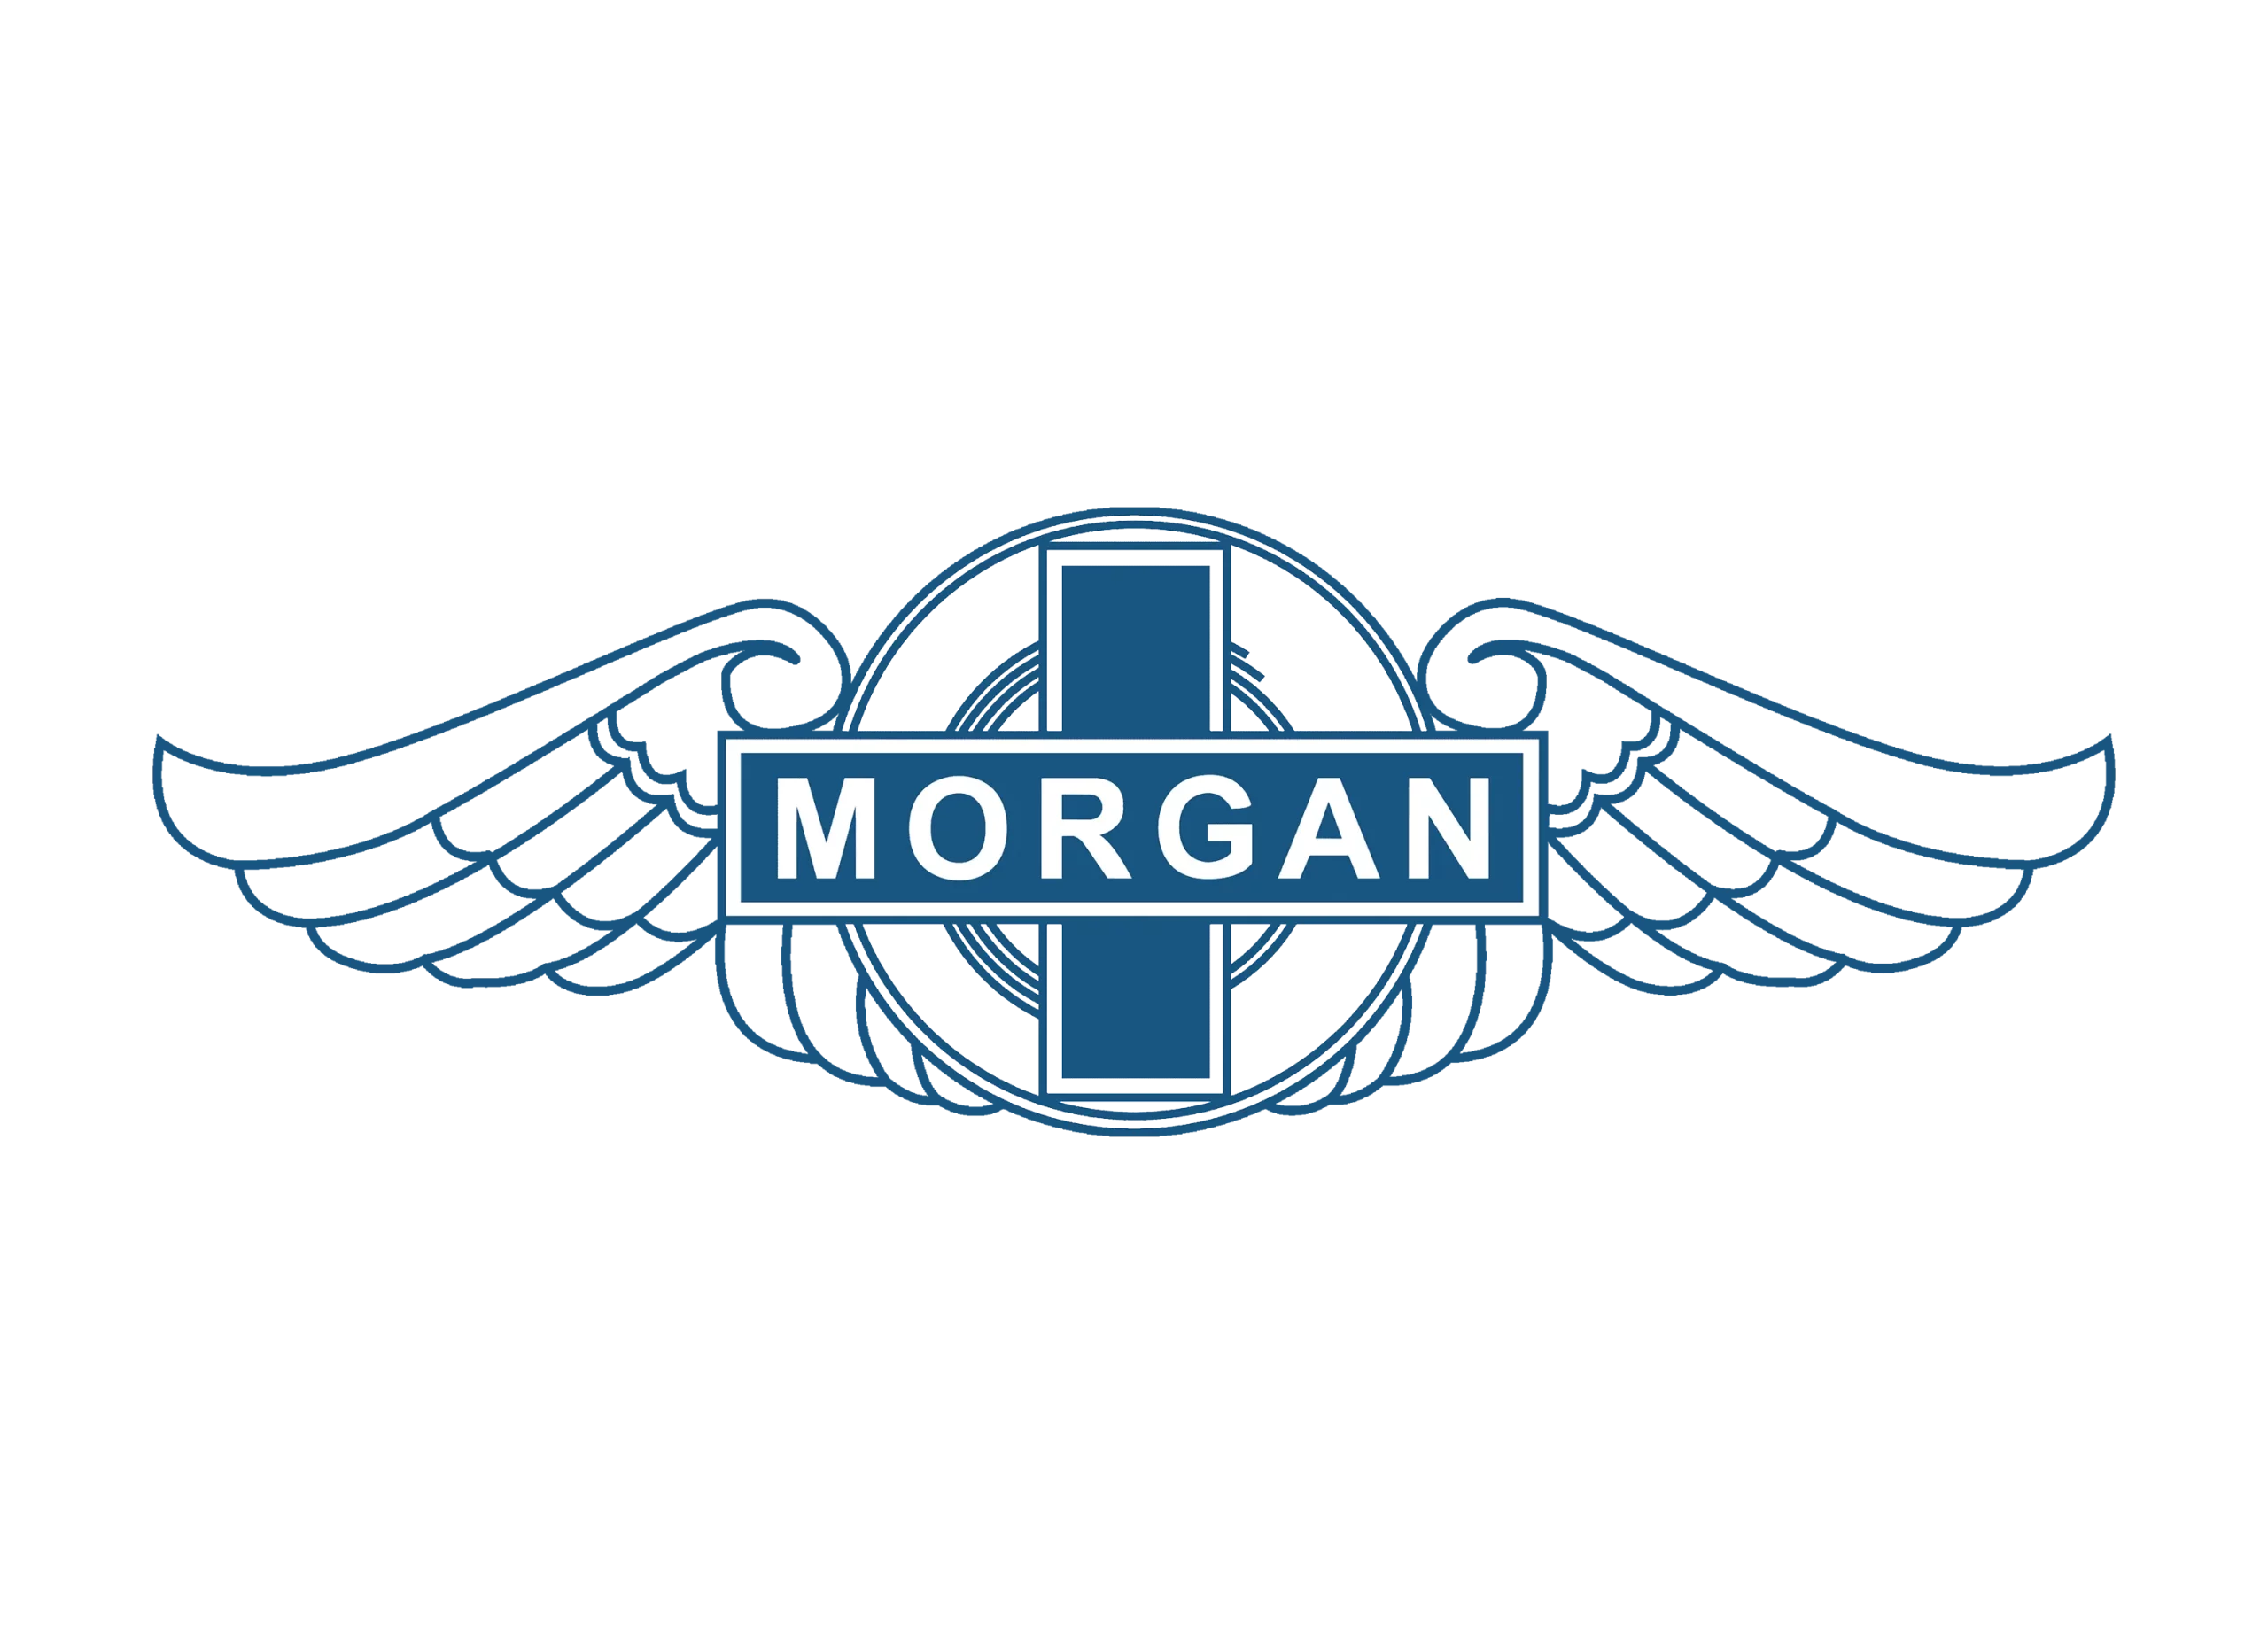 Morgan logo 1909-2008